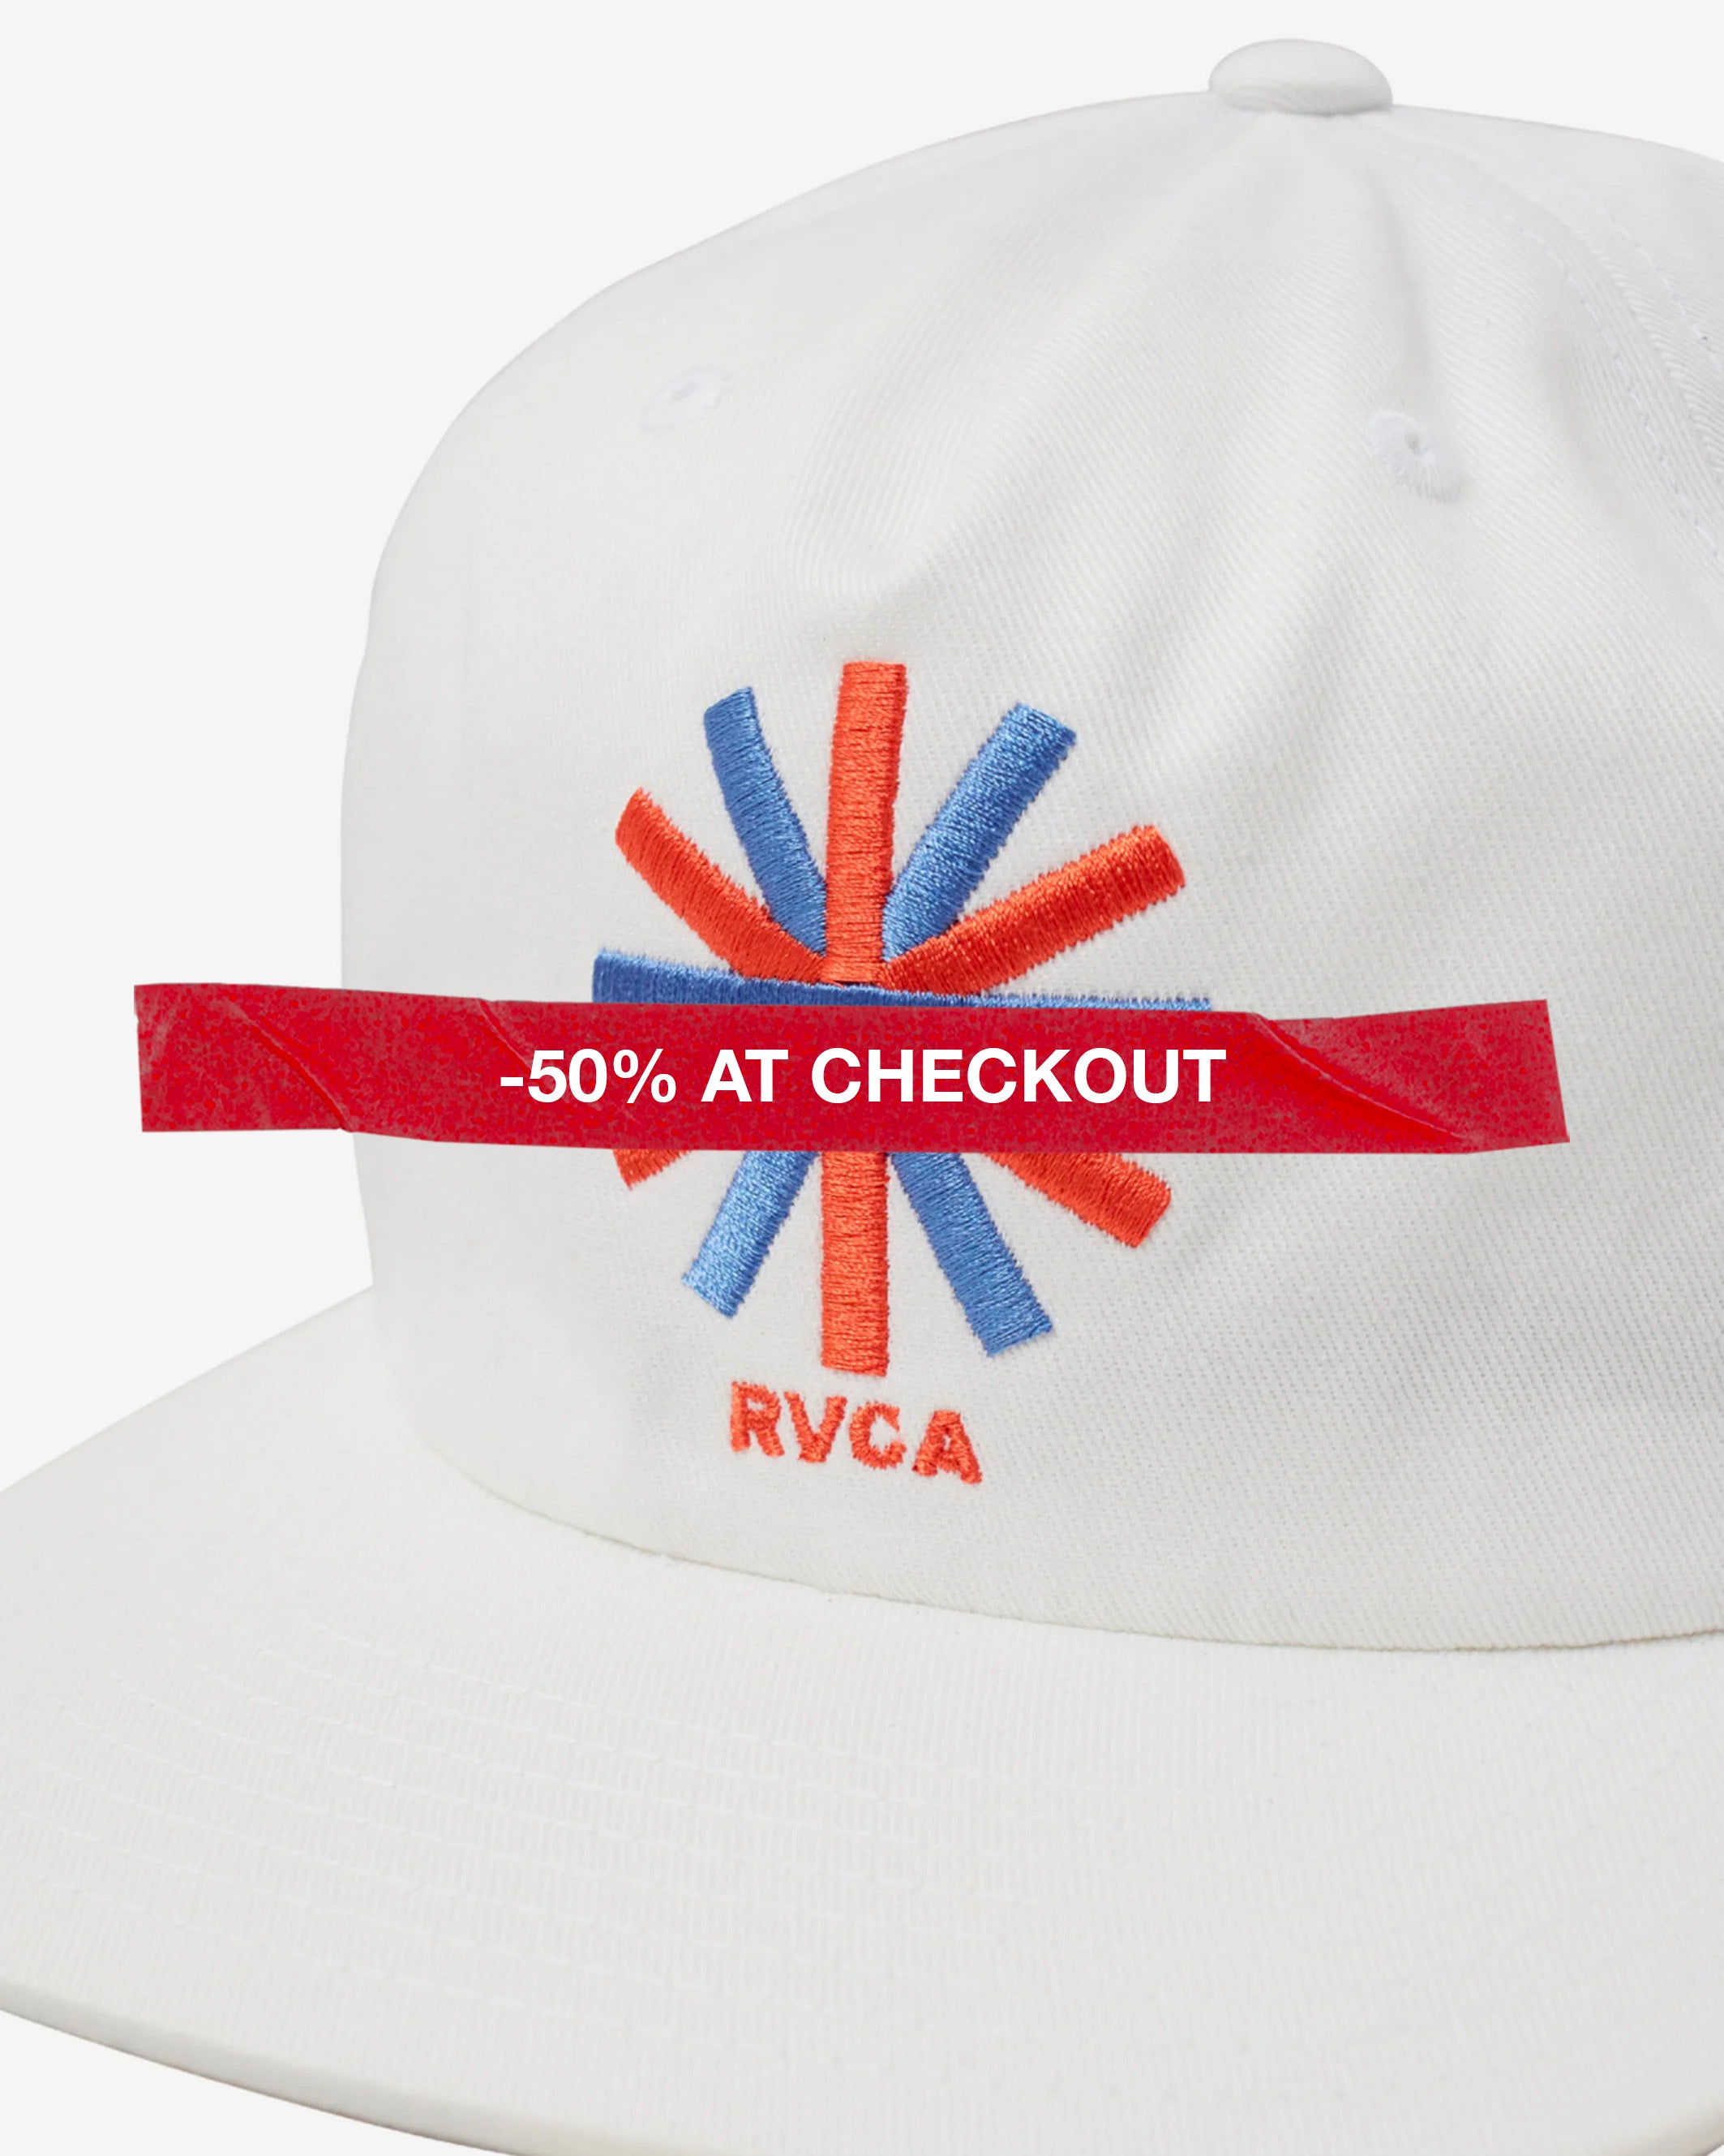 RVCA - Jesse Brown Asterisk Snapback Hat